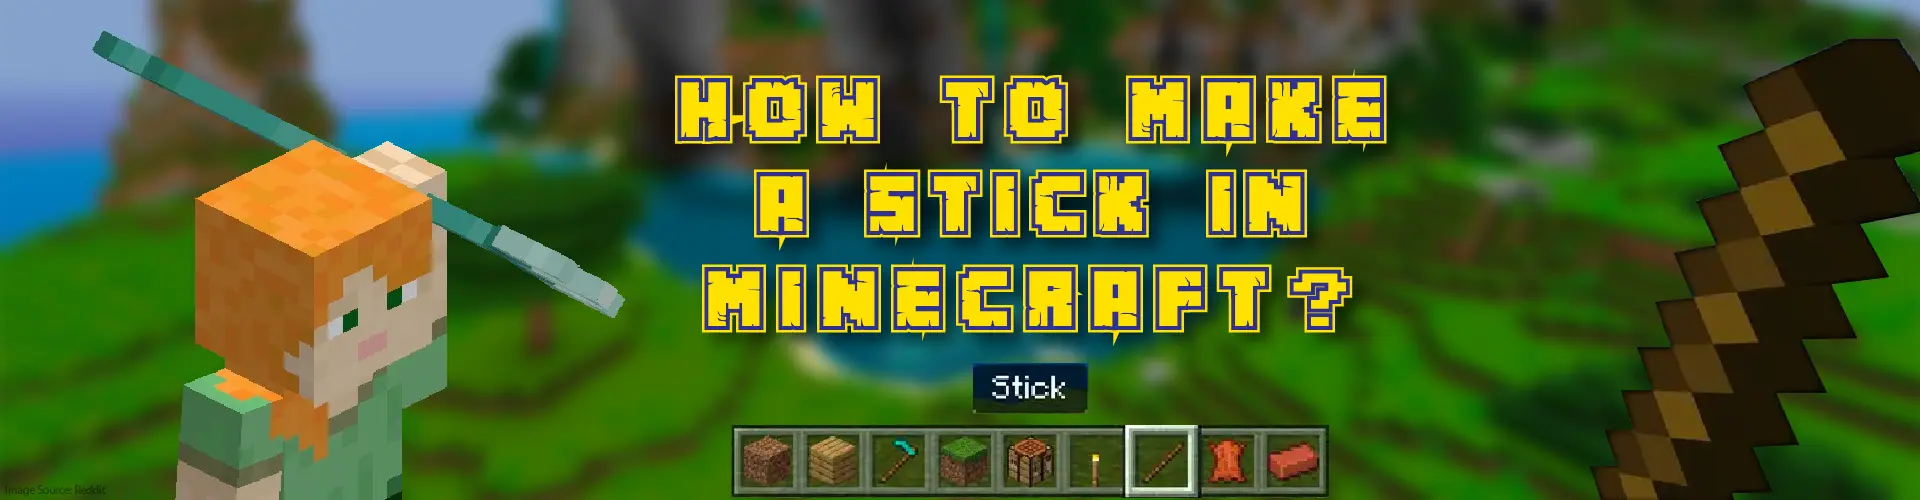 Make a Stick in Minecraft